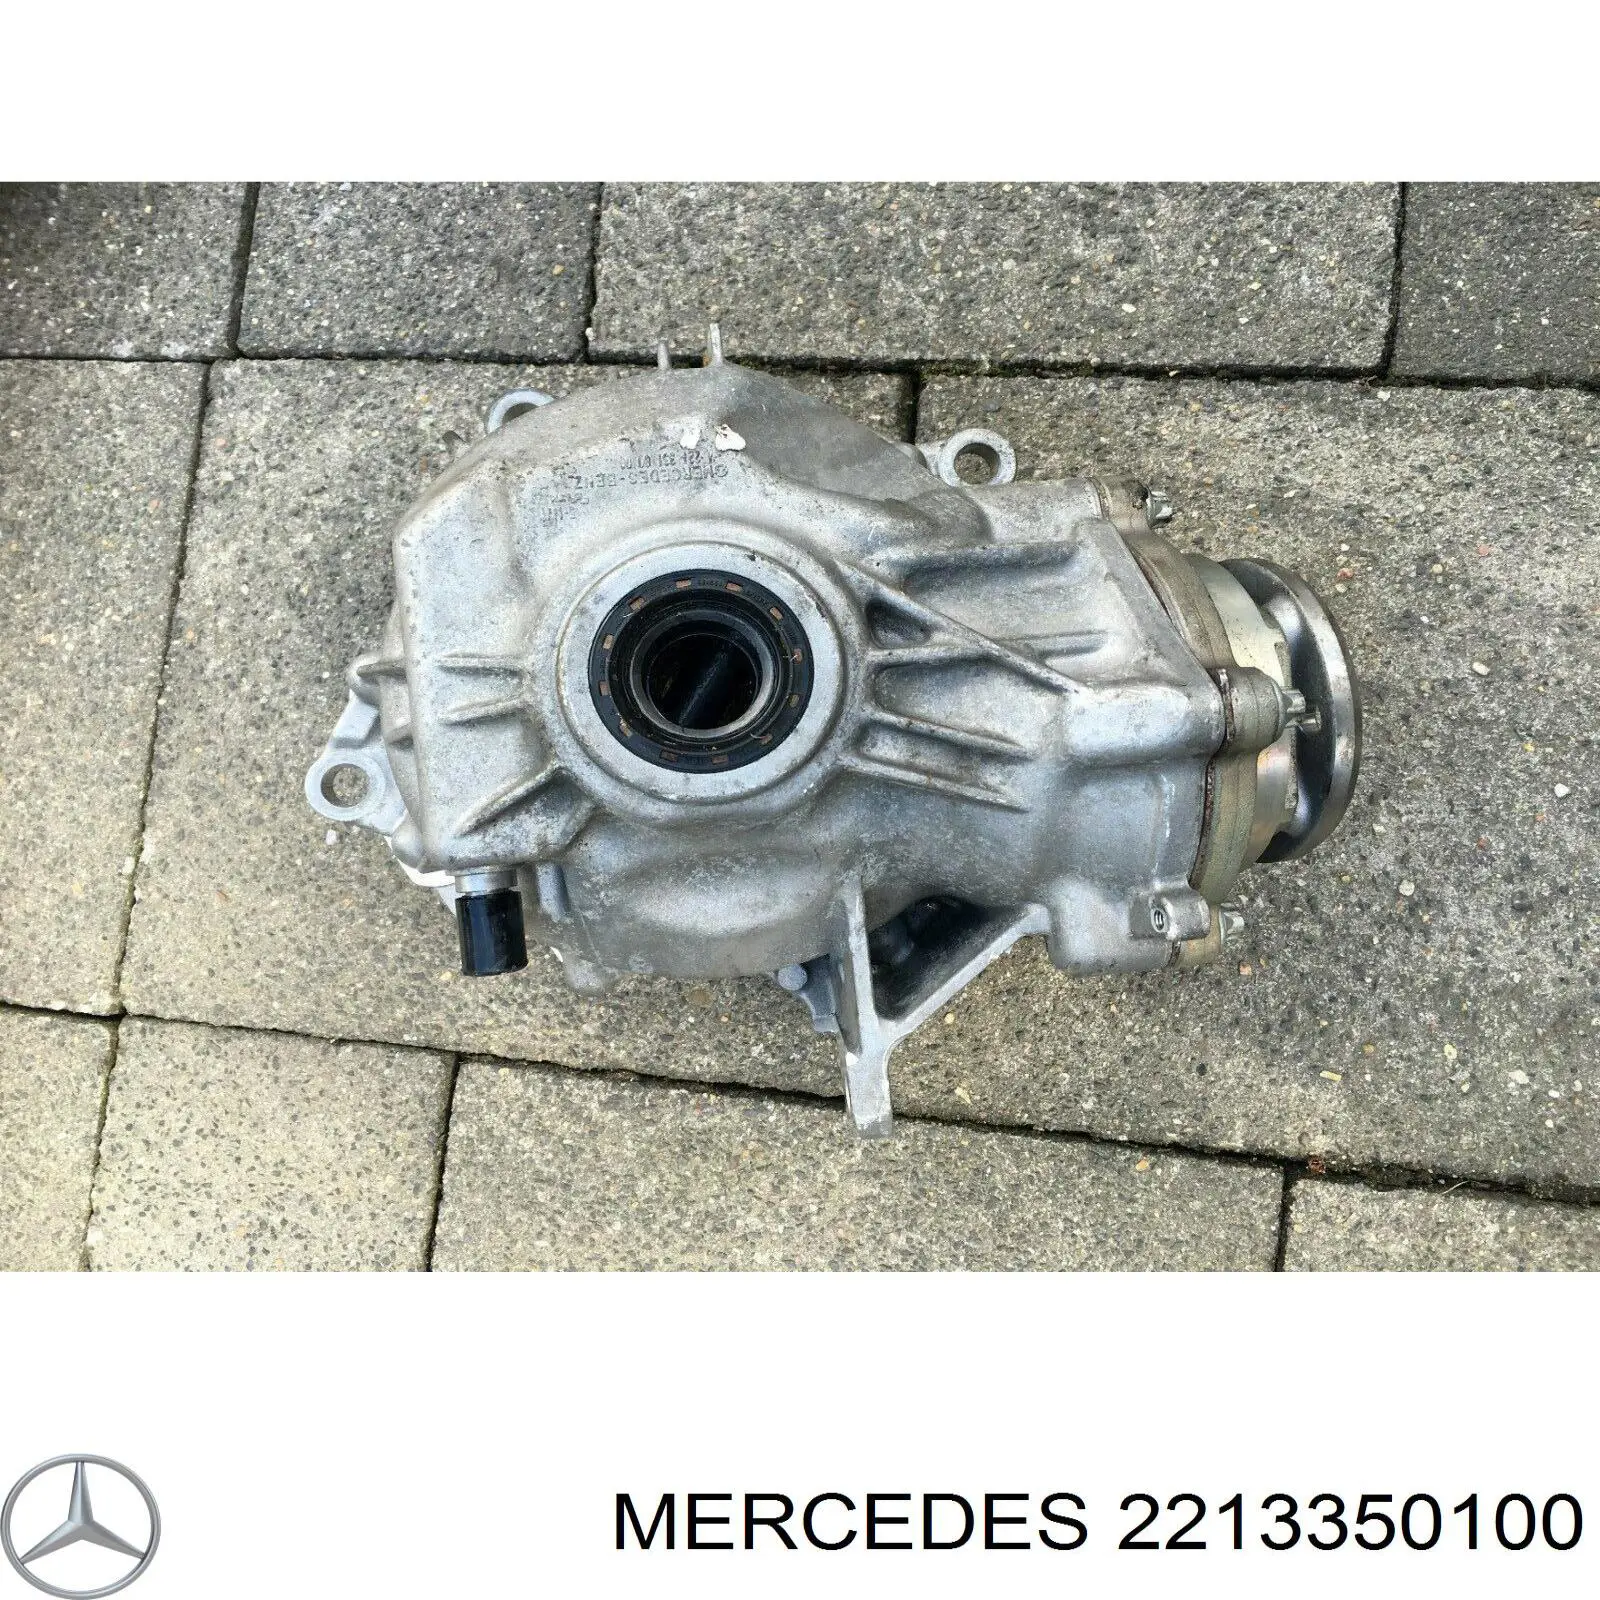 A2213350100 Mercedes